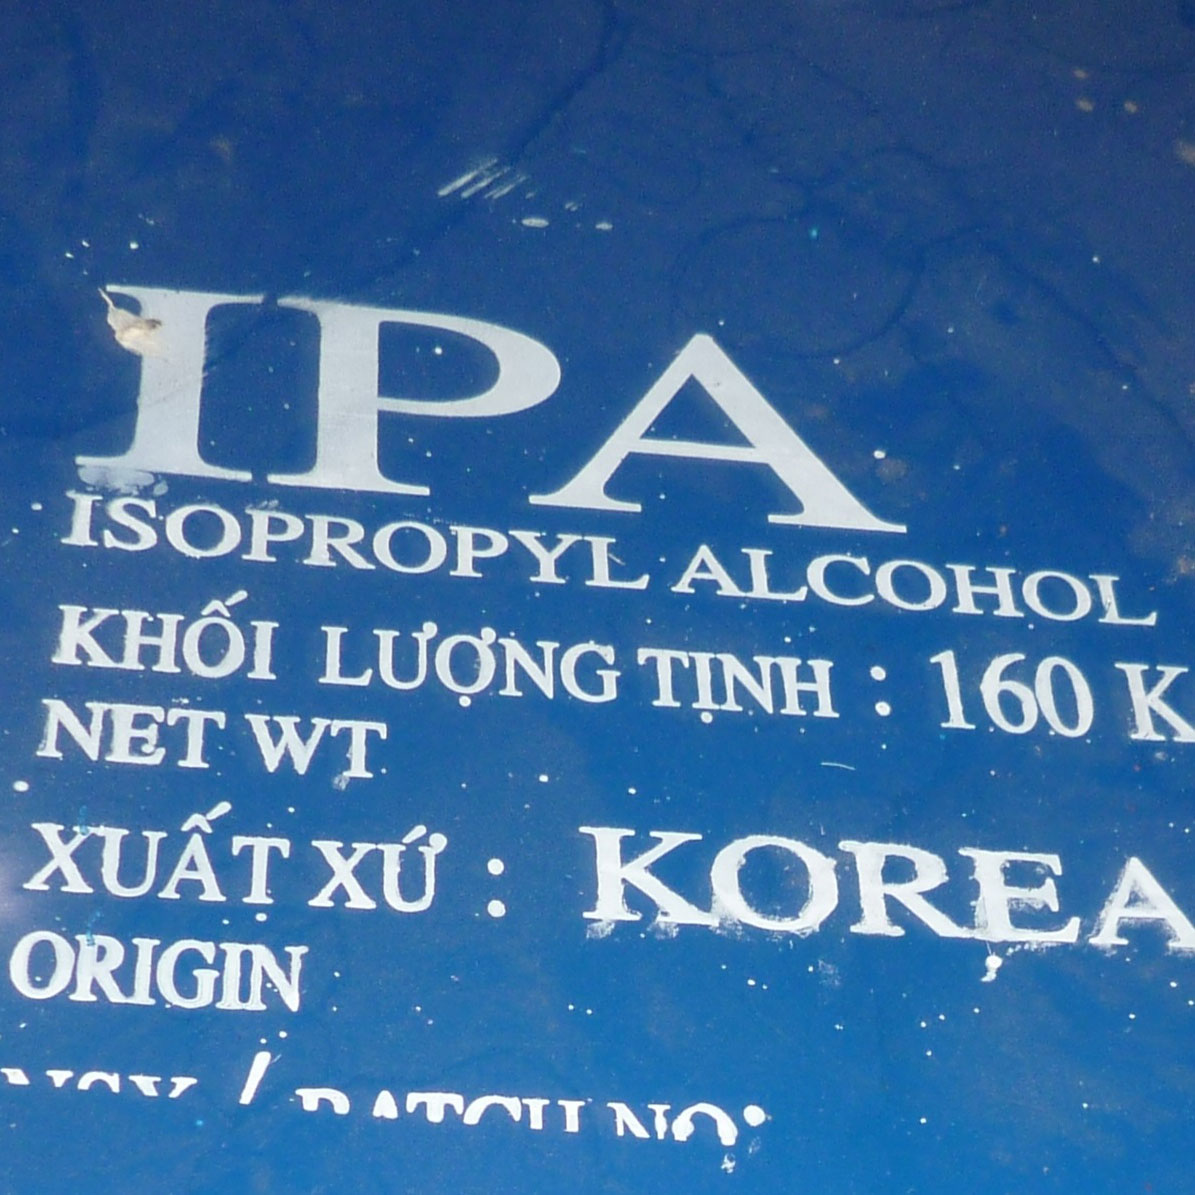 Isopropyl Alcohol